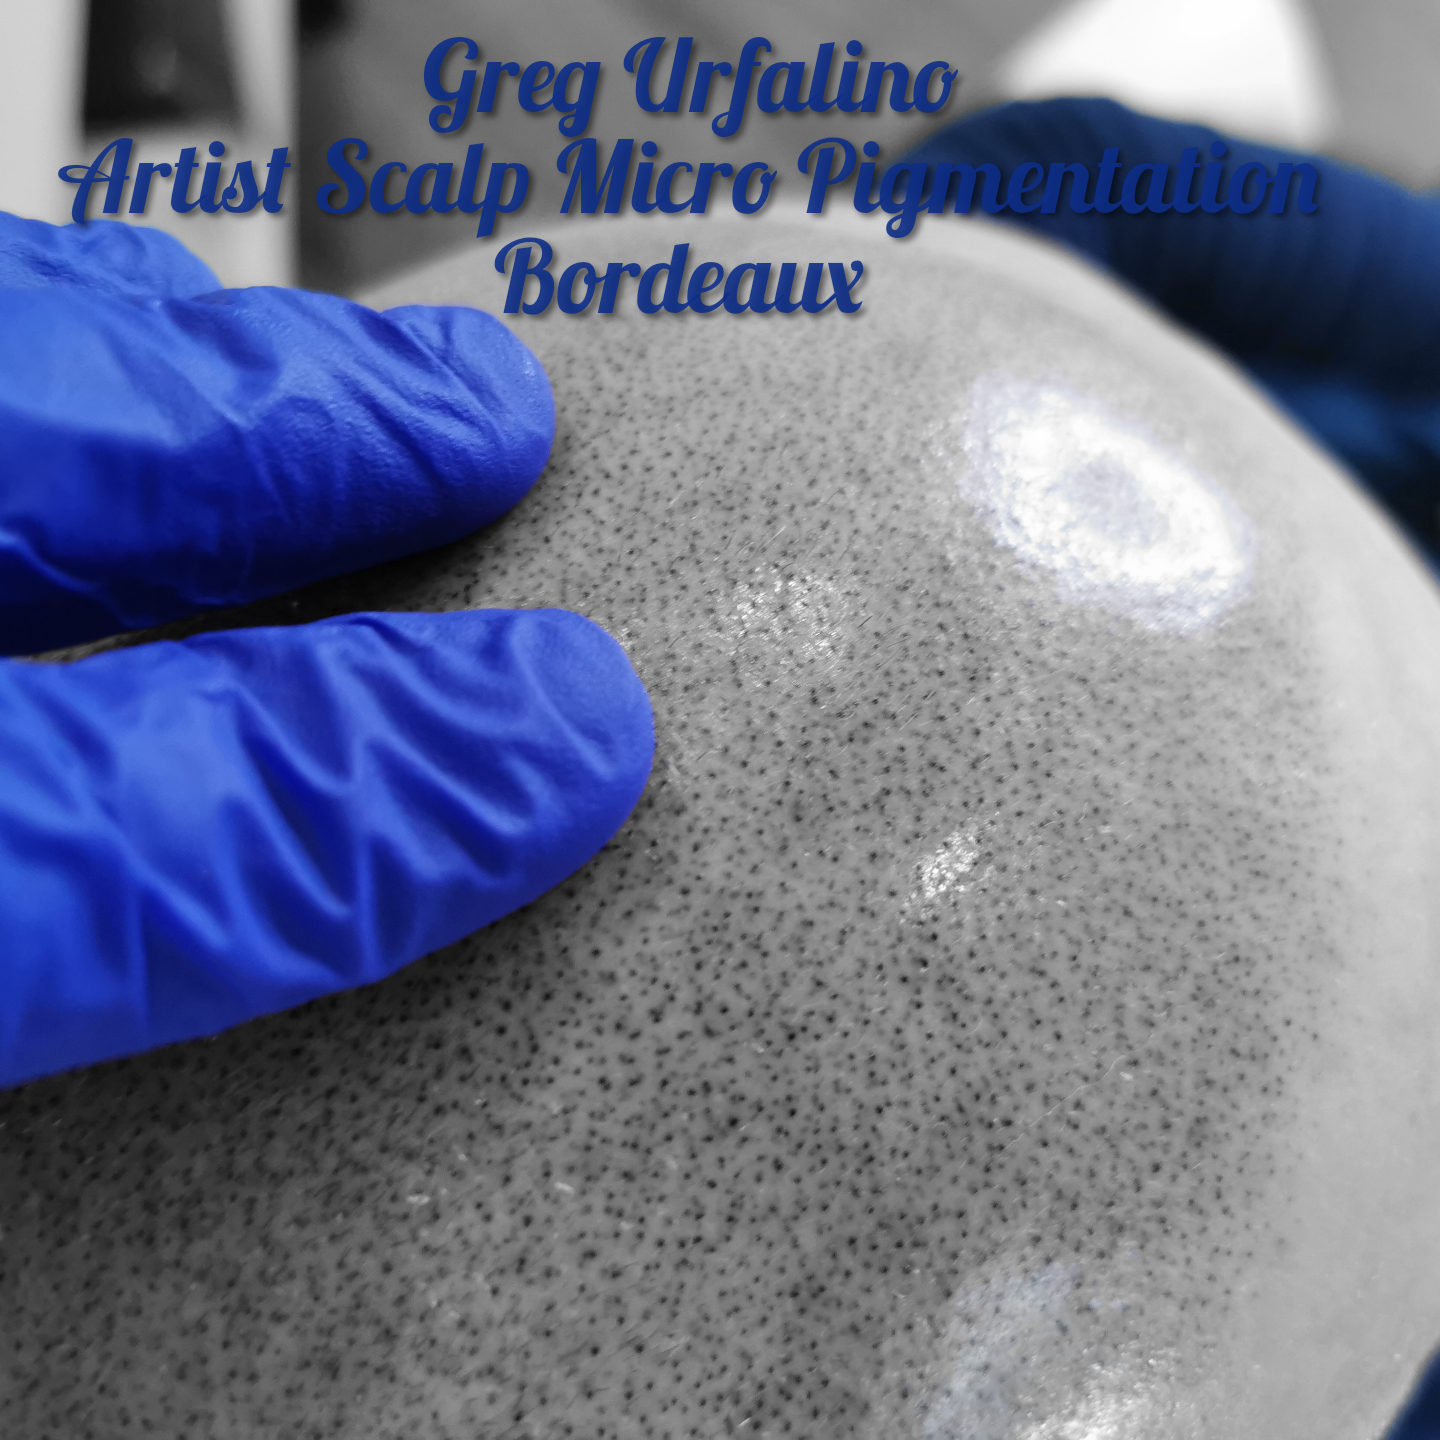 Greg Urfalino artist smp bordeaux #tricopigmentation #tricopigmentationbordeaux #smpbordeaux